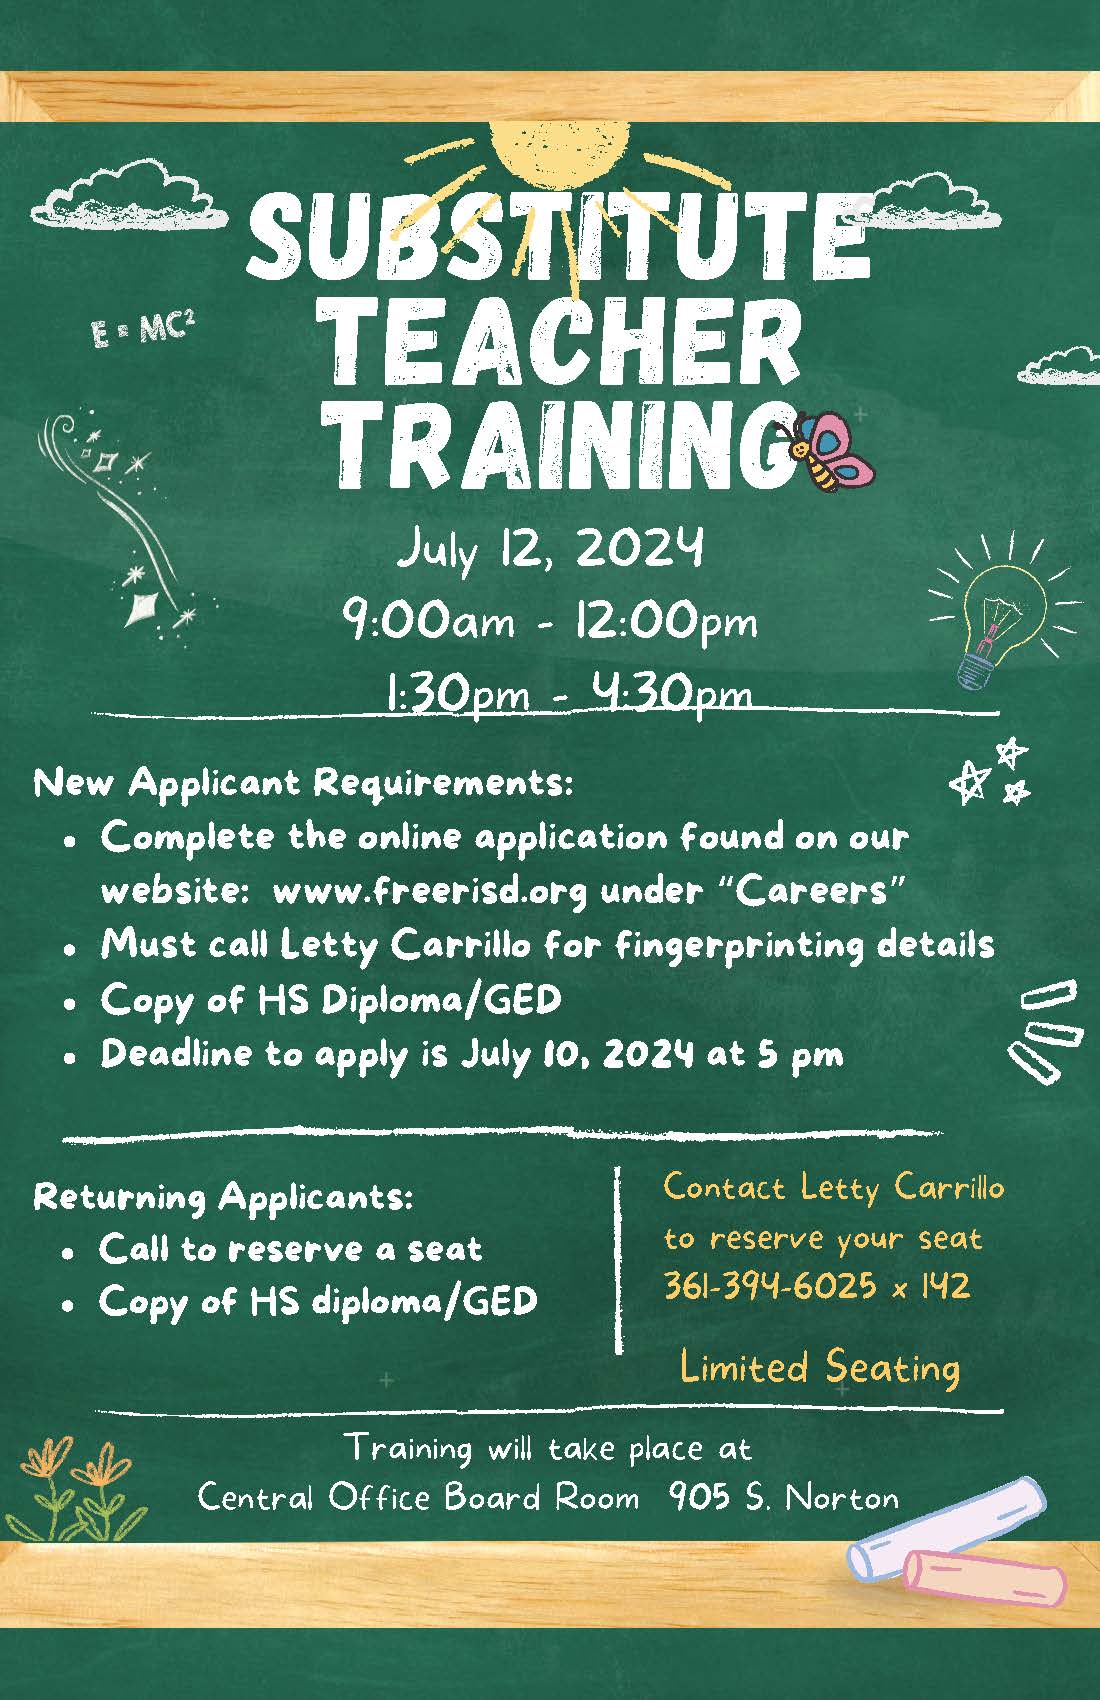 Substitute Teacher Training Flyer Image